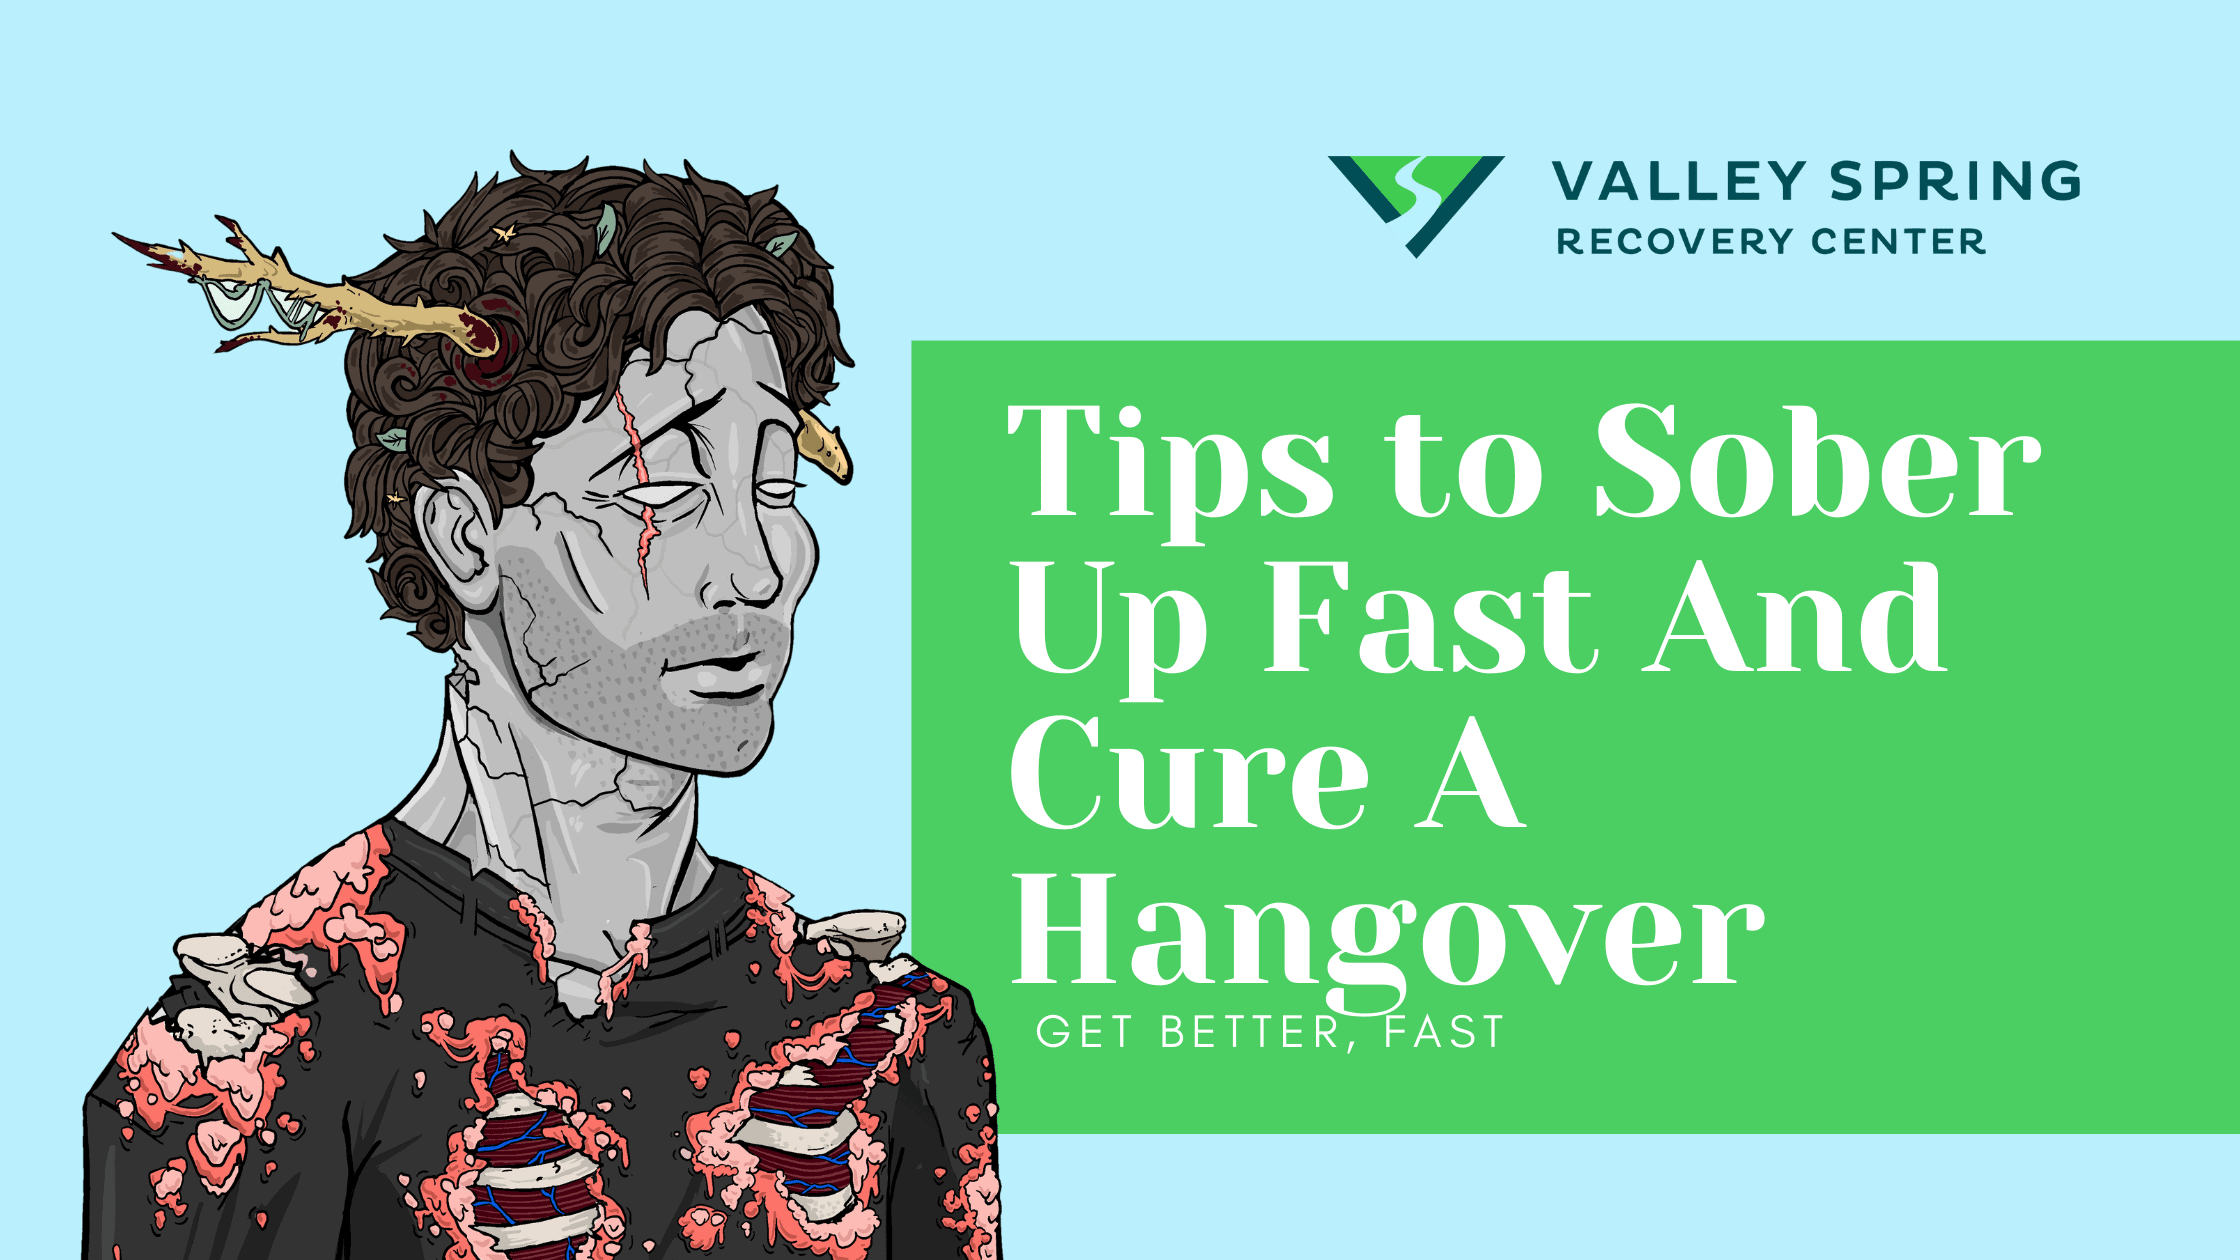 Hangover Relief - headache, nausea, thirst, dizziness after